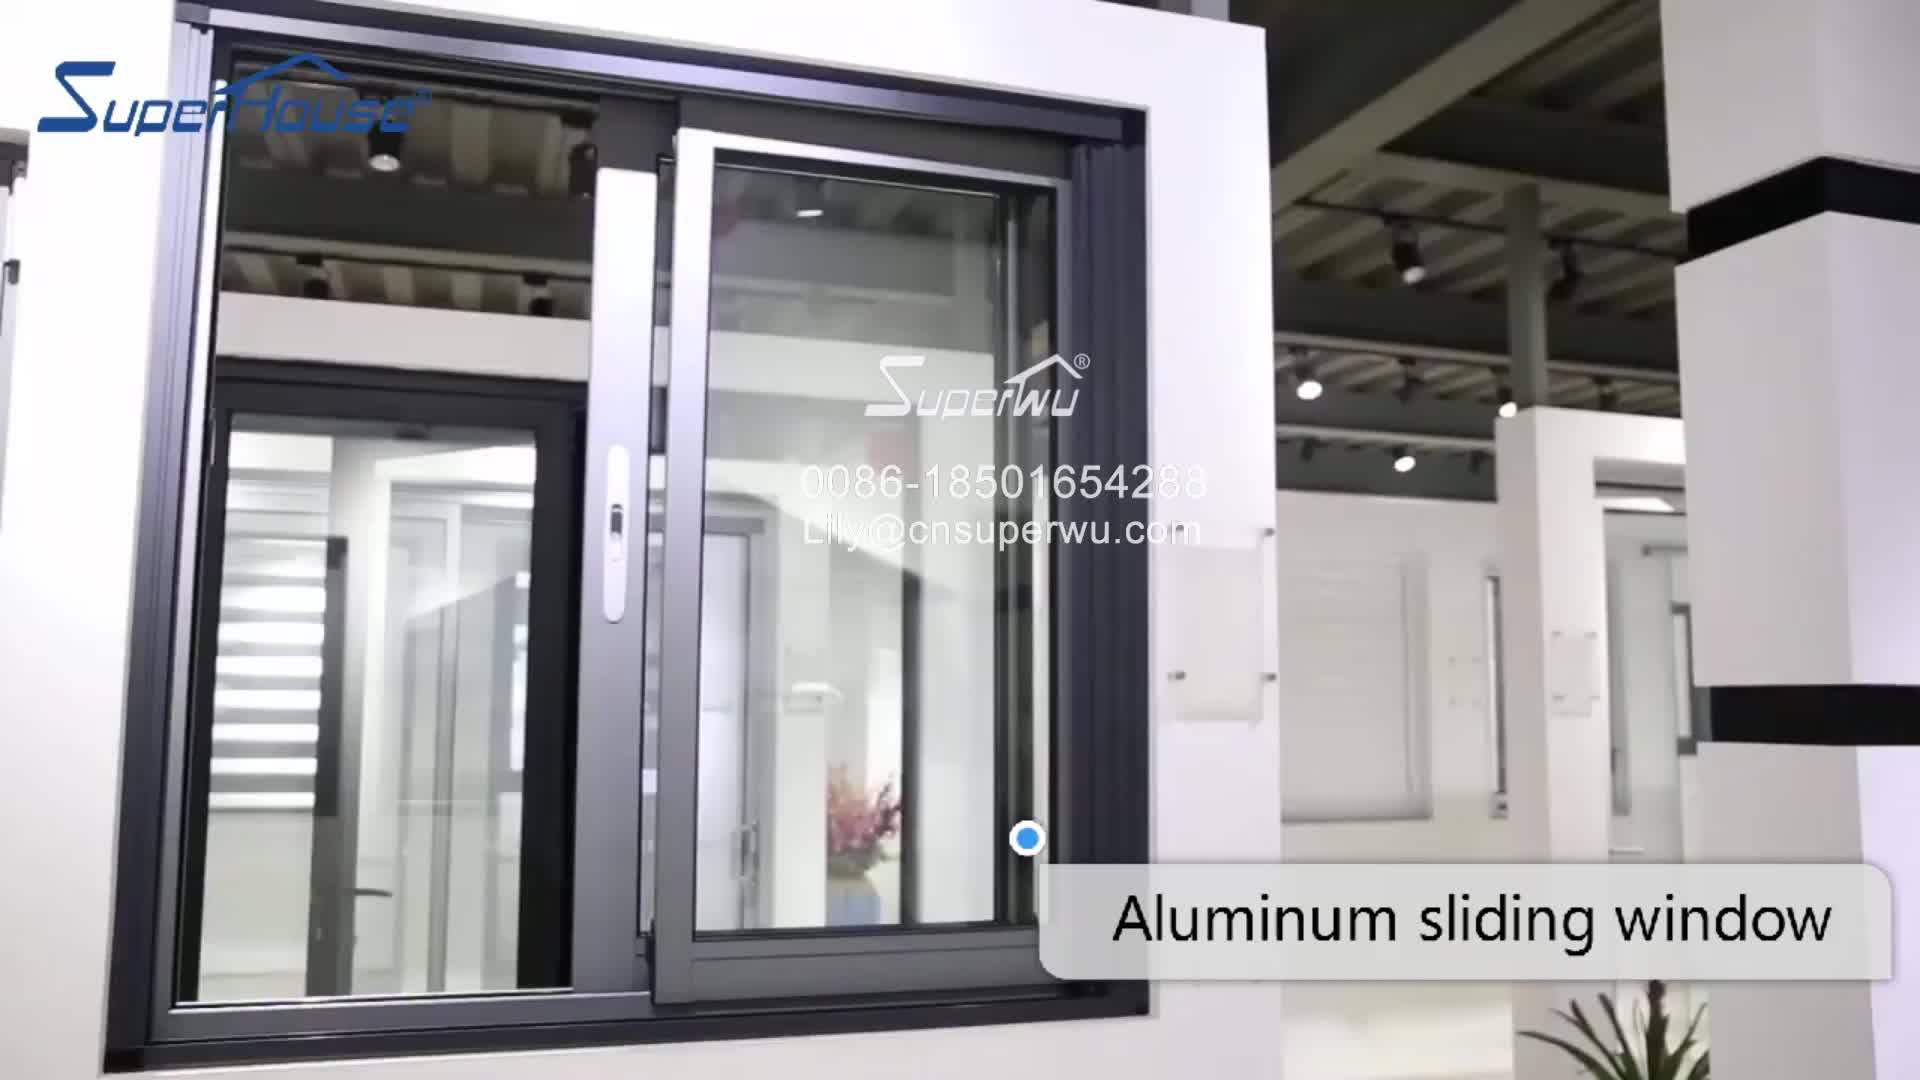 Superhouse Superwu economic cheap price of aluminium sliding window price United States